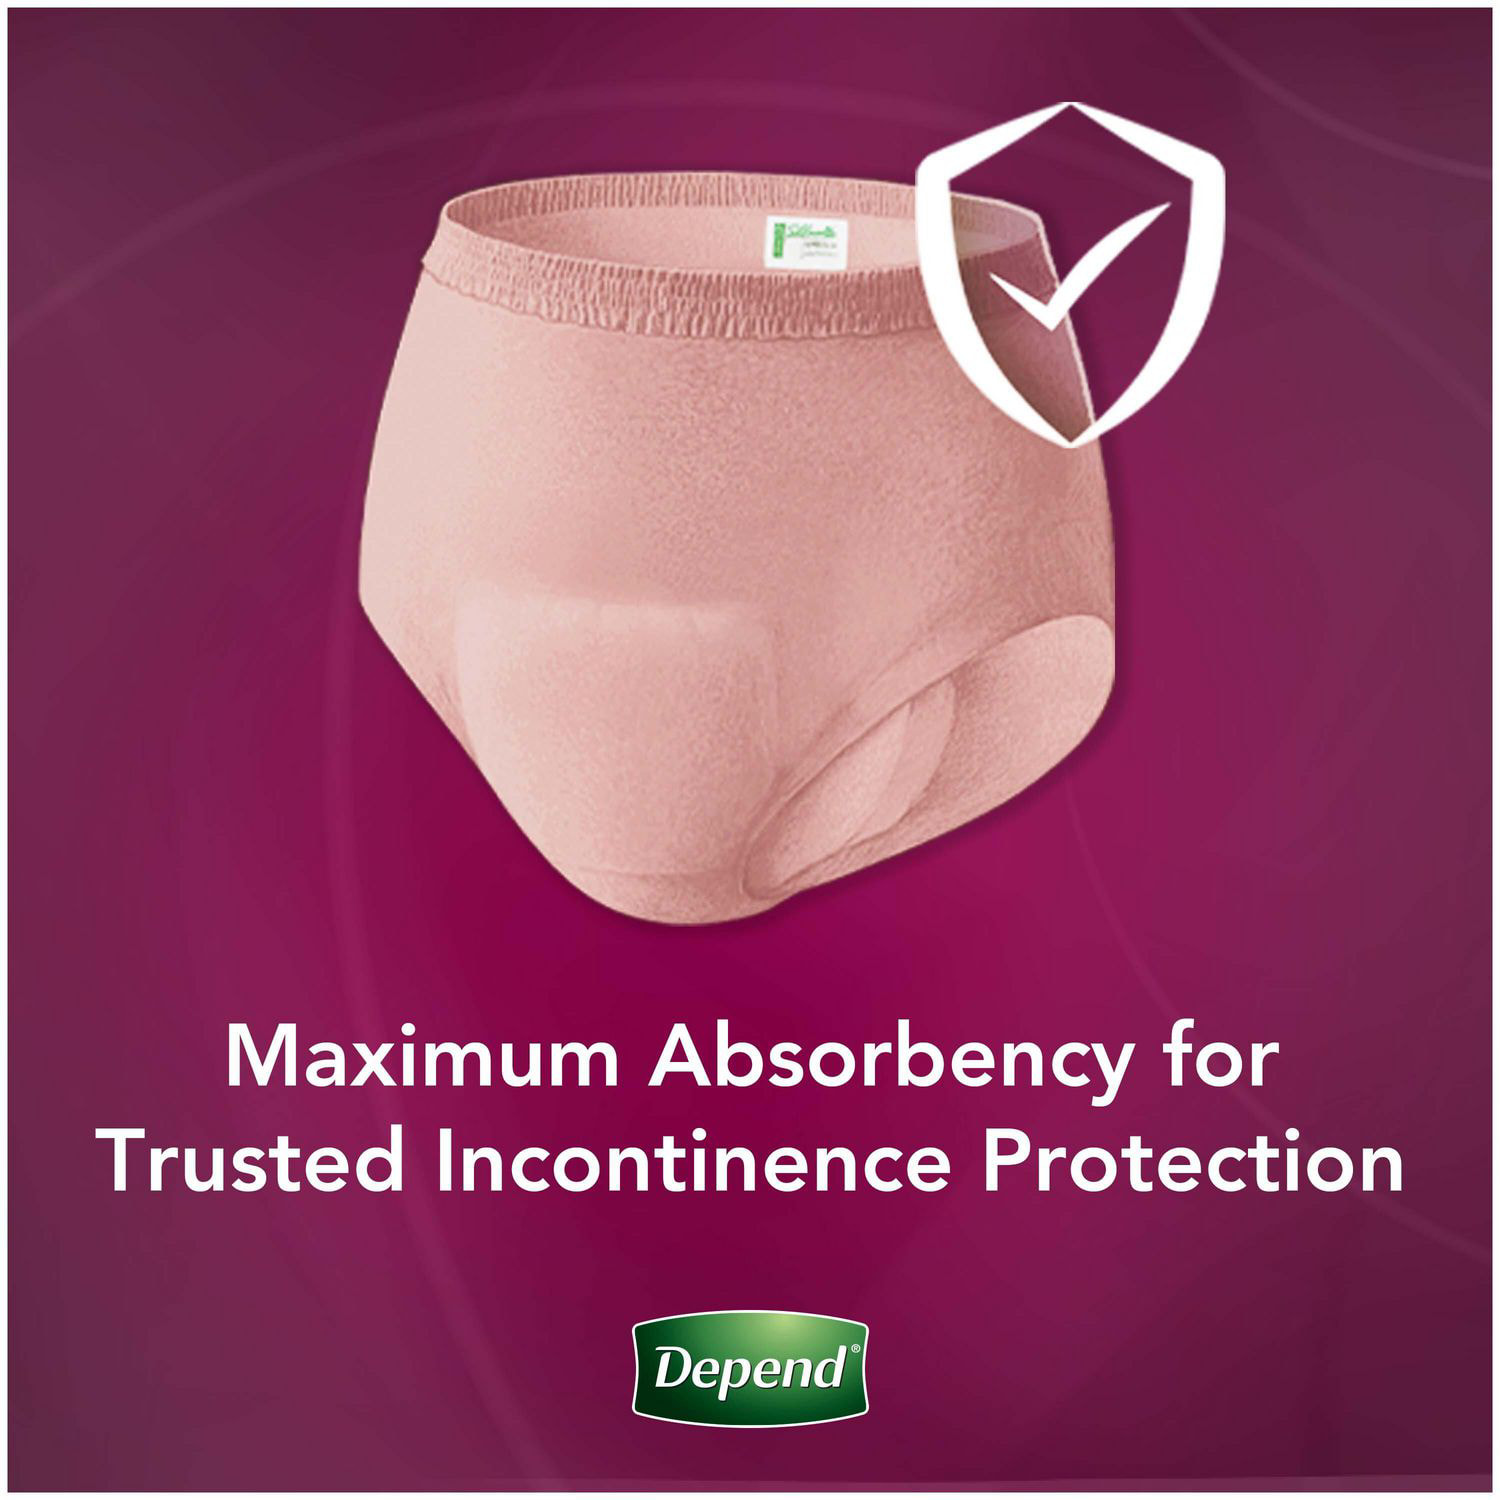 Aire LA Premium Extra Absorbency Women's Period Panties